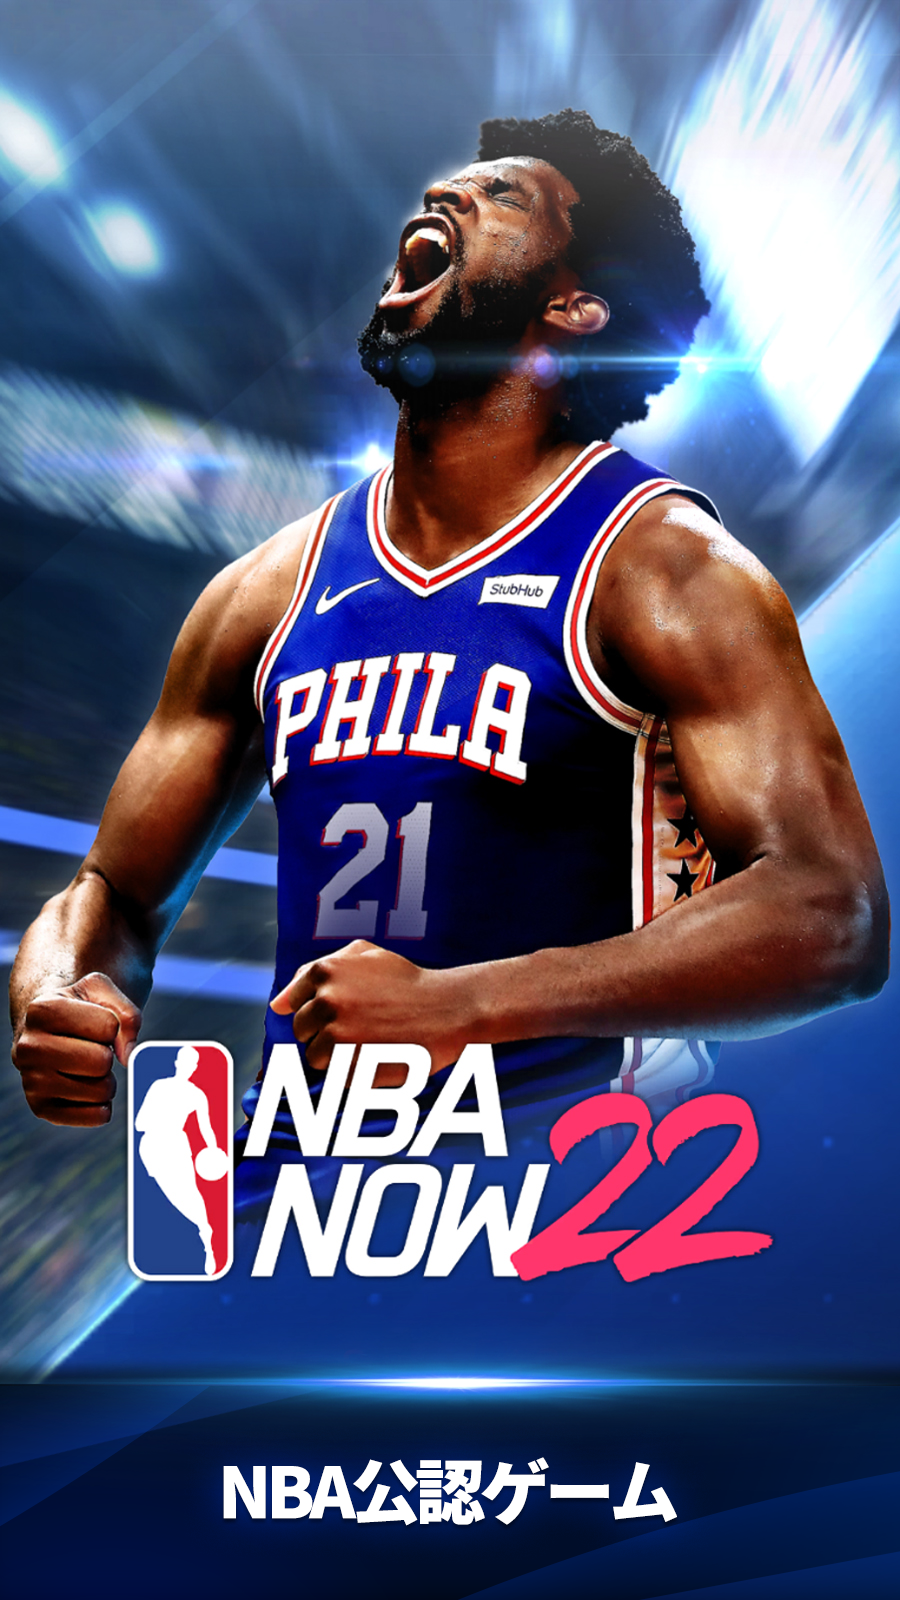 Screenshot 1 of NBA NOW 22 2.0.0